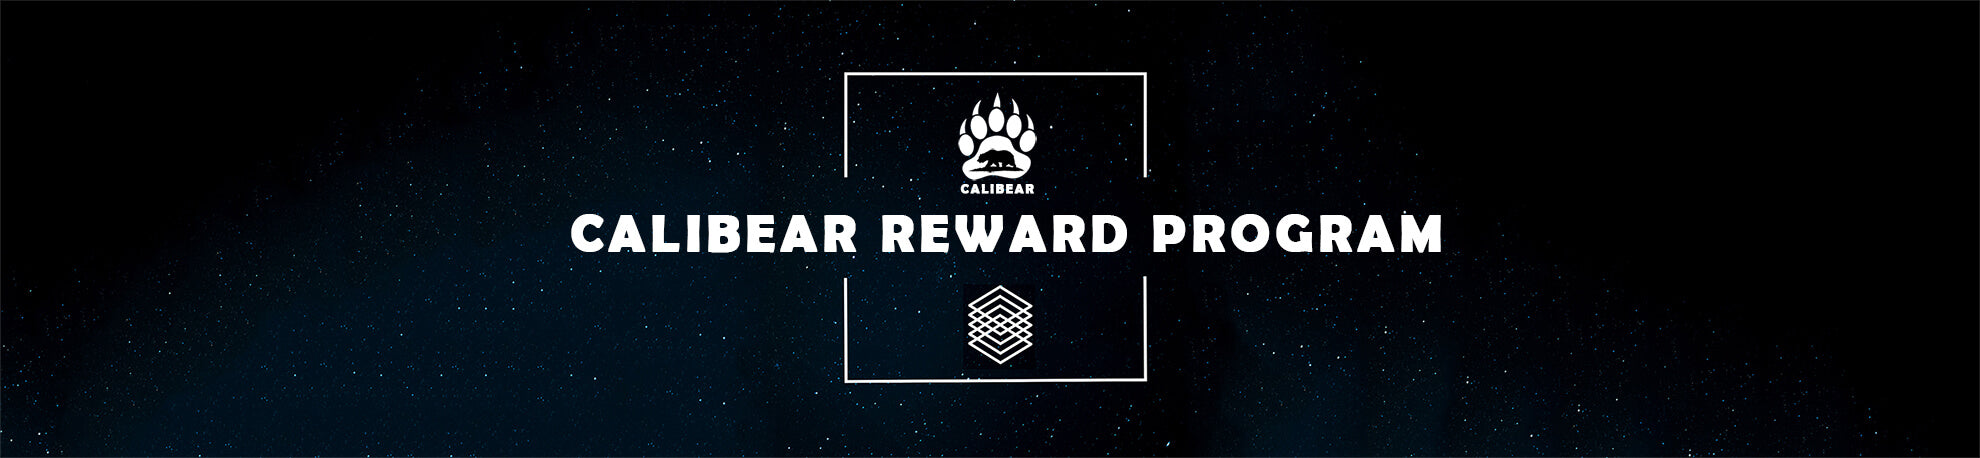 calibear reward program